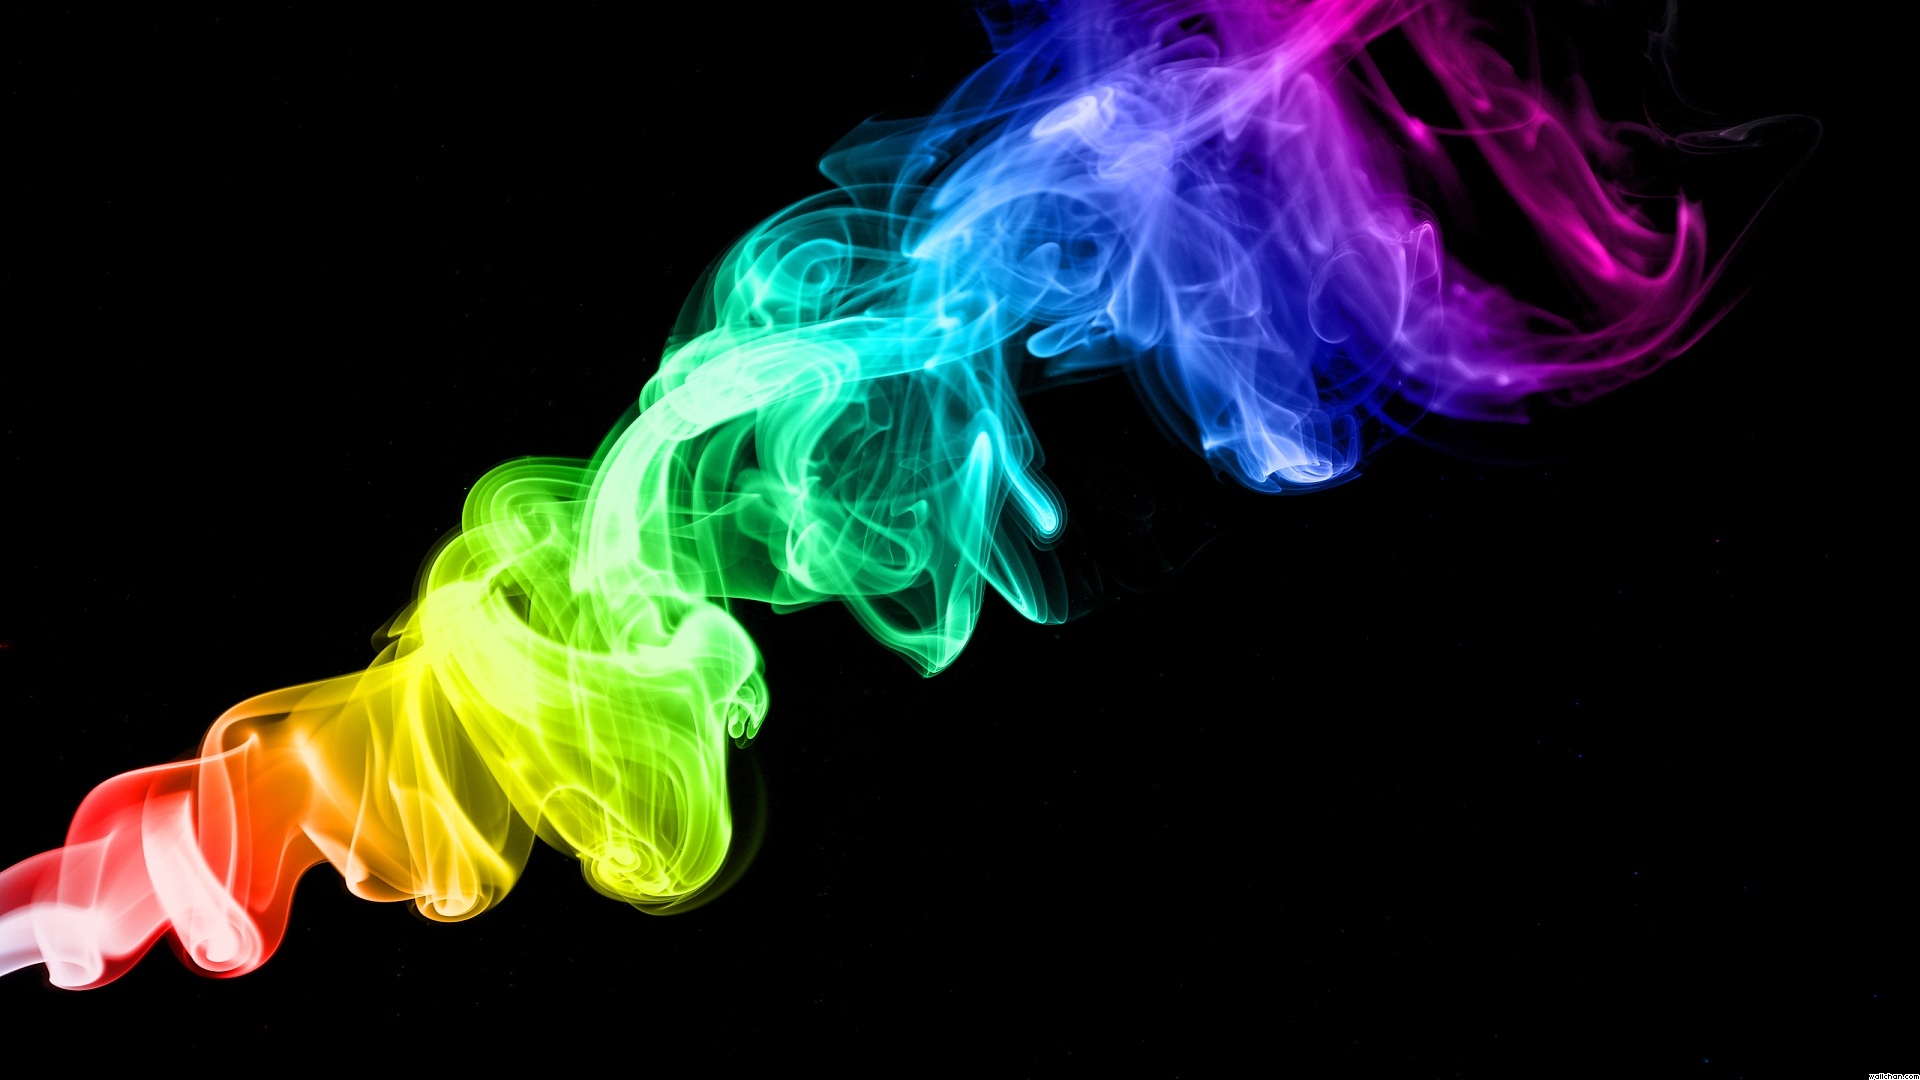 Background Rainbow Smoke Cool Sandbox Colorful Image Wallpaper